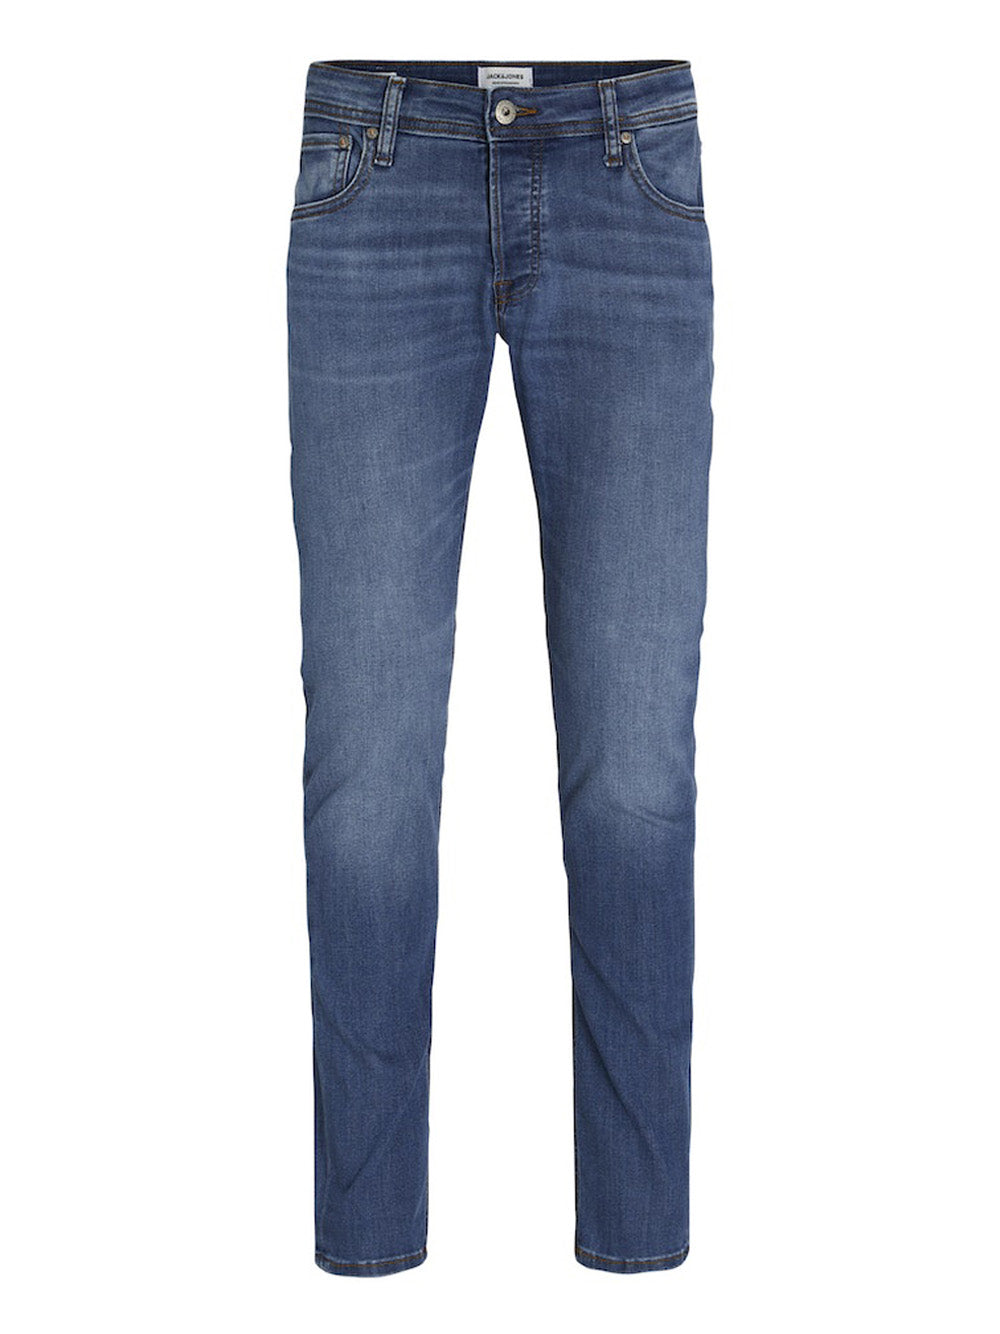 JACK&JONES Jeans Uomo - Blu modello 12157416